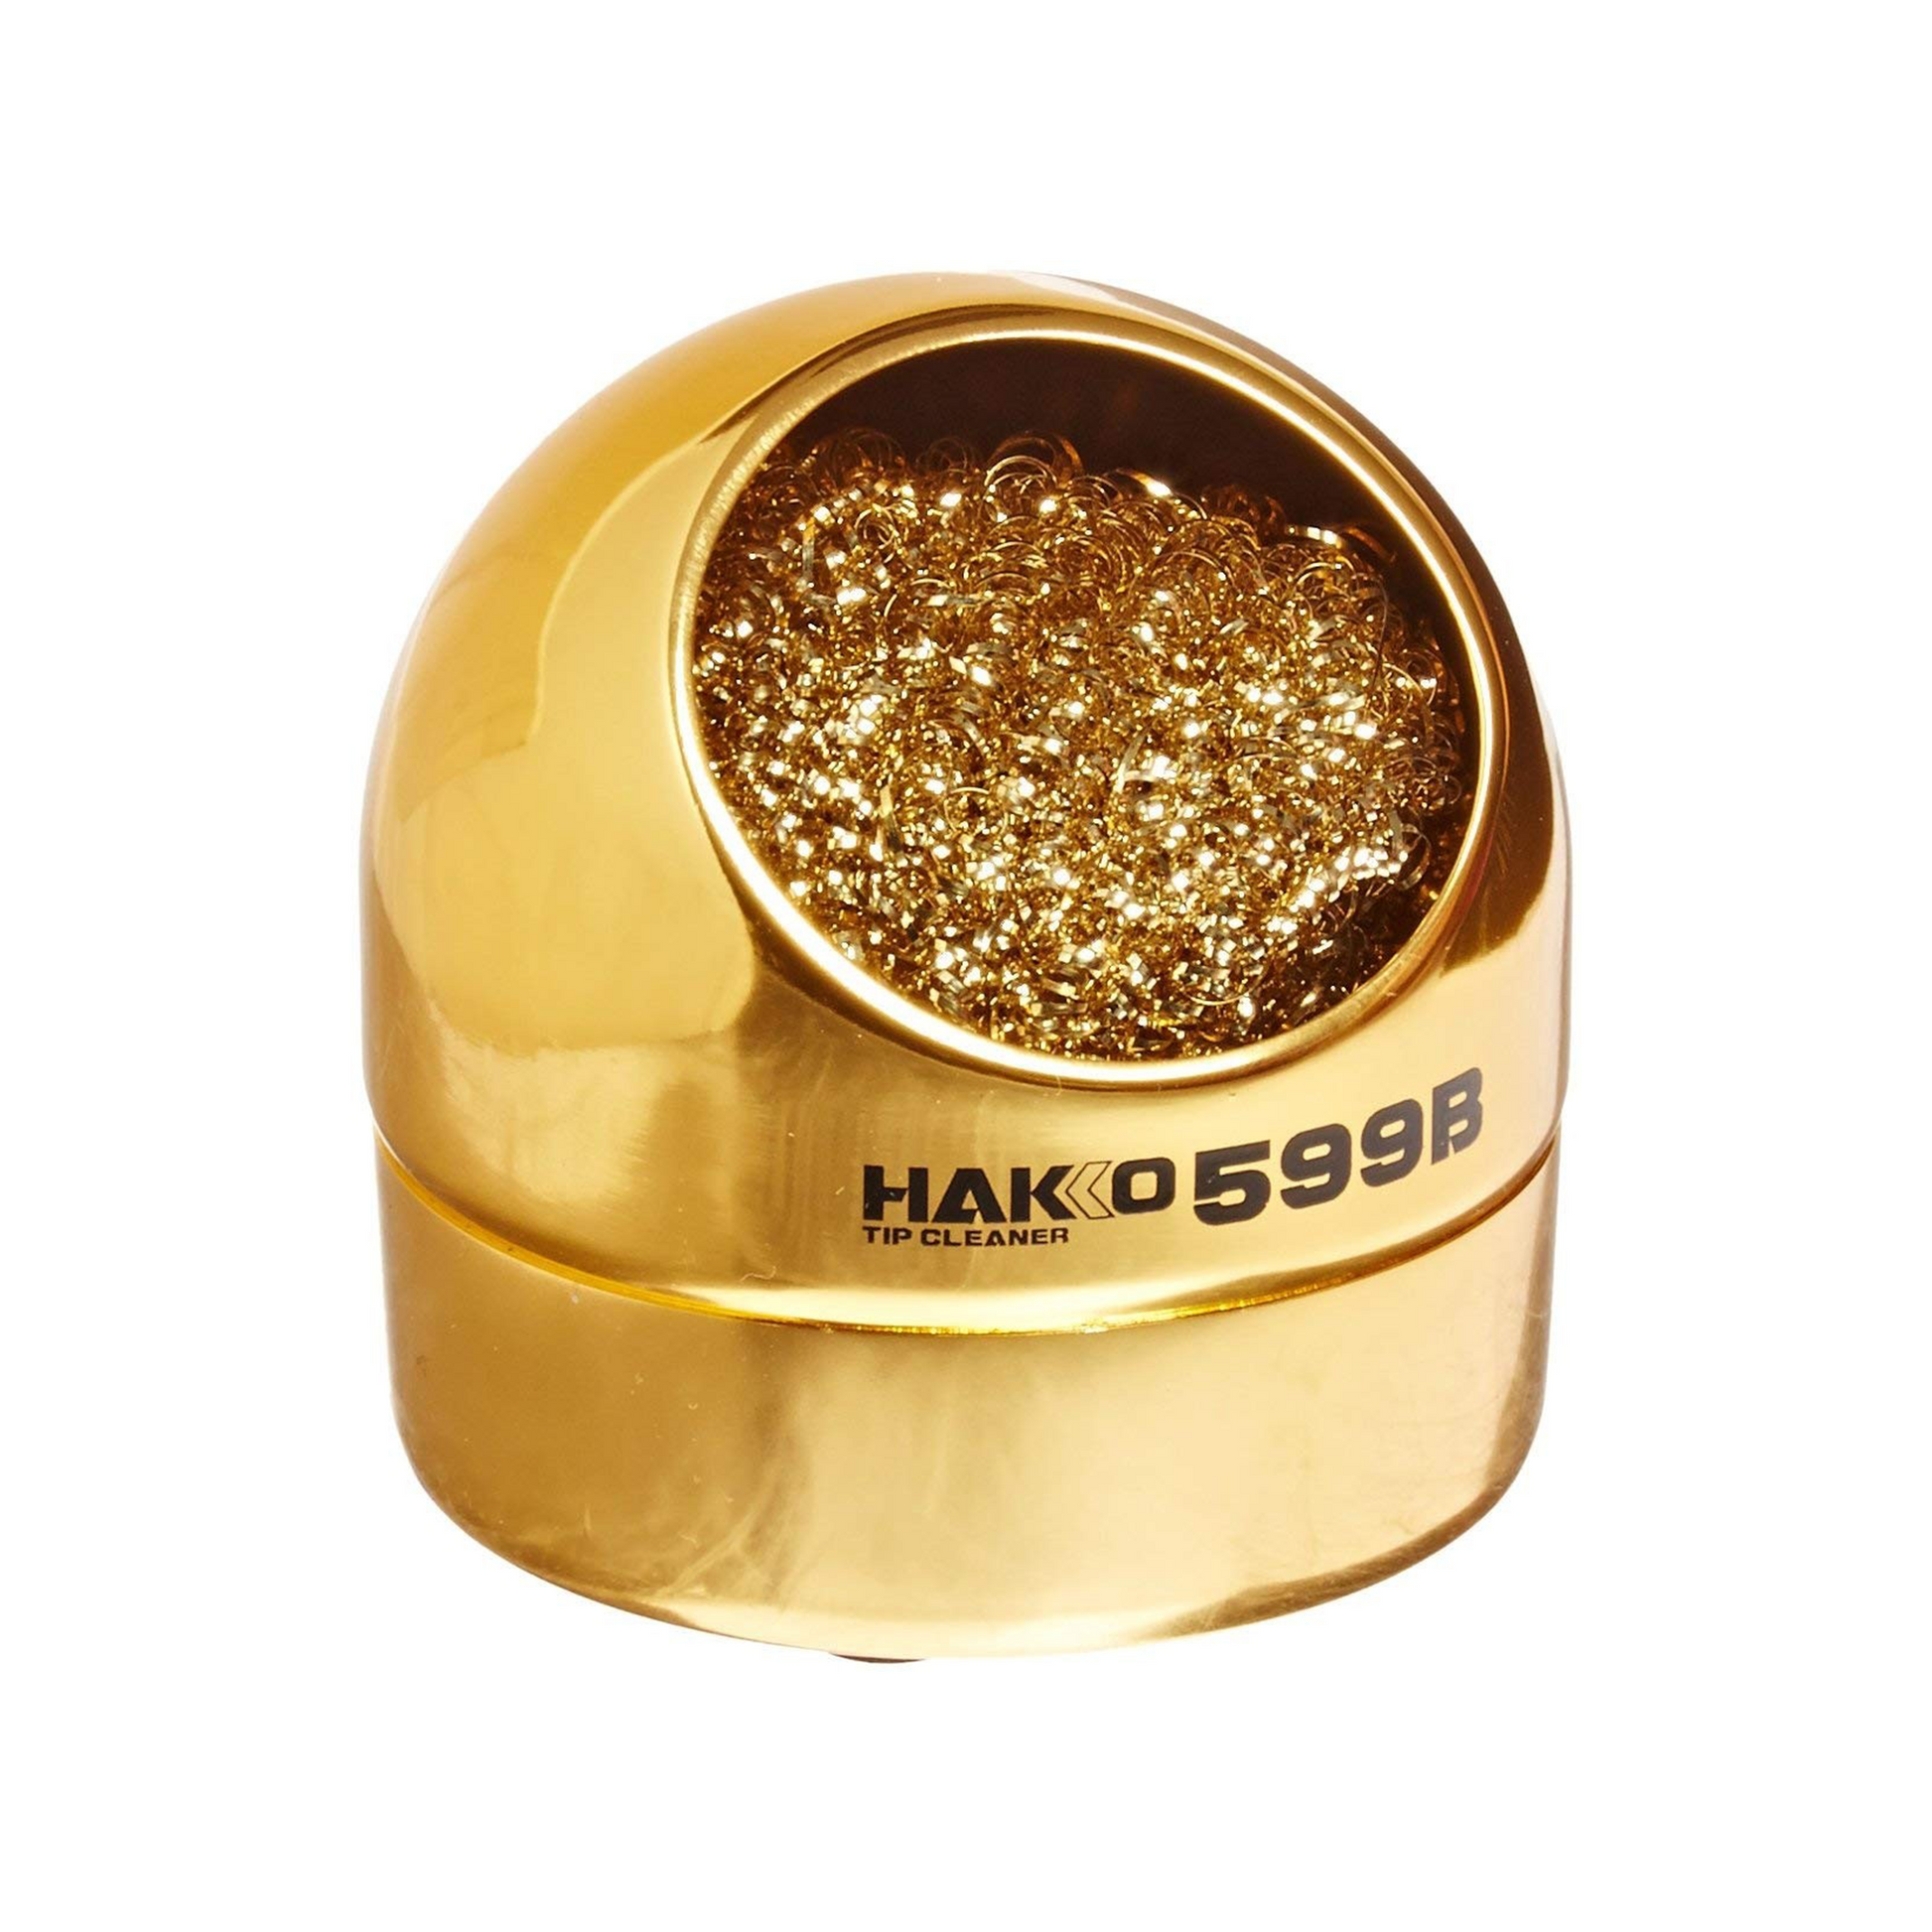 Hakko_ 599B-02 Tip Cleaner_ Tip Cleaning Accessories_ Hakko Products